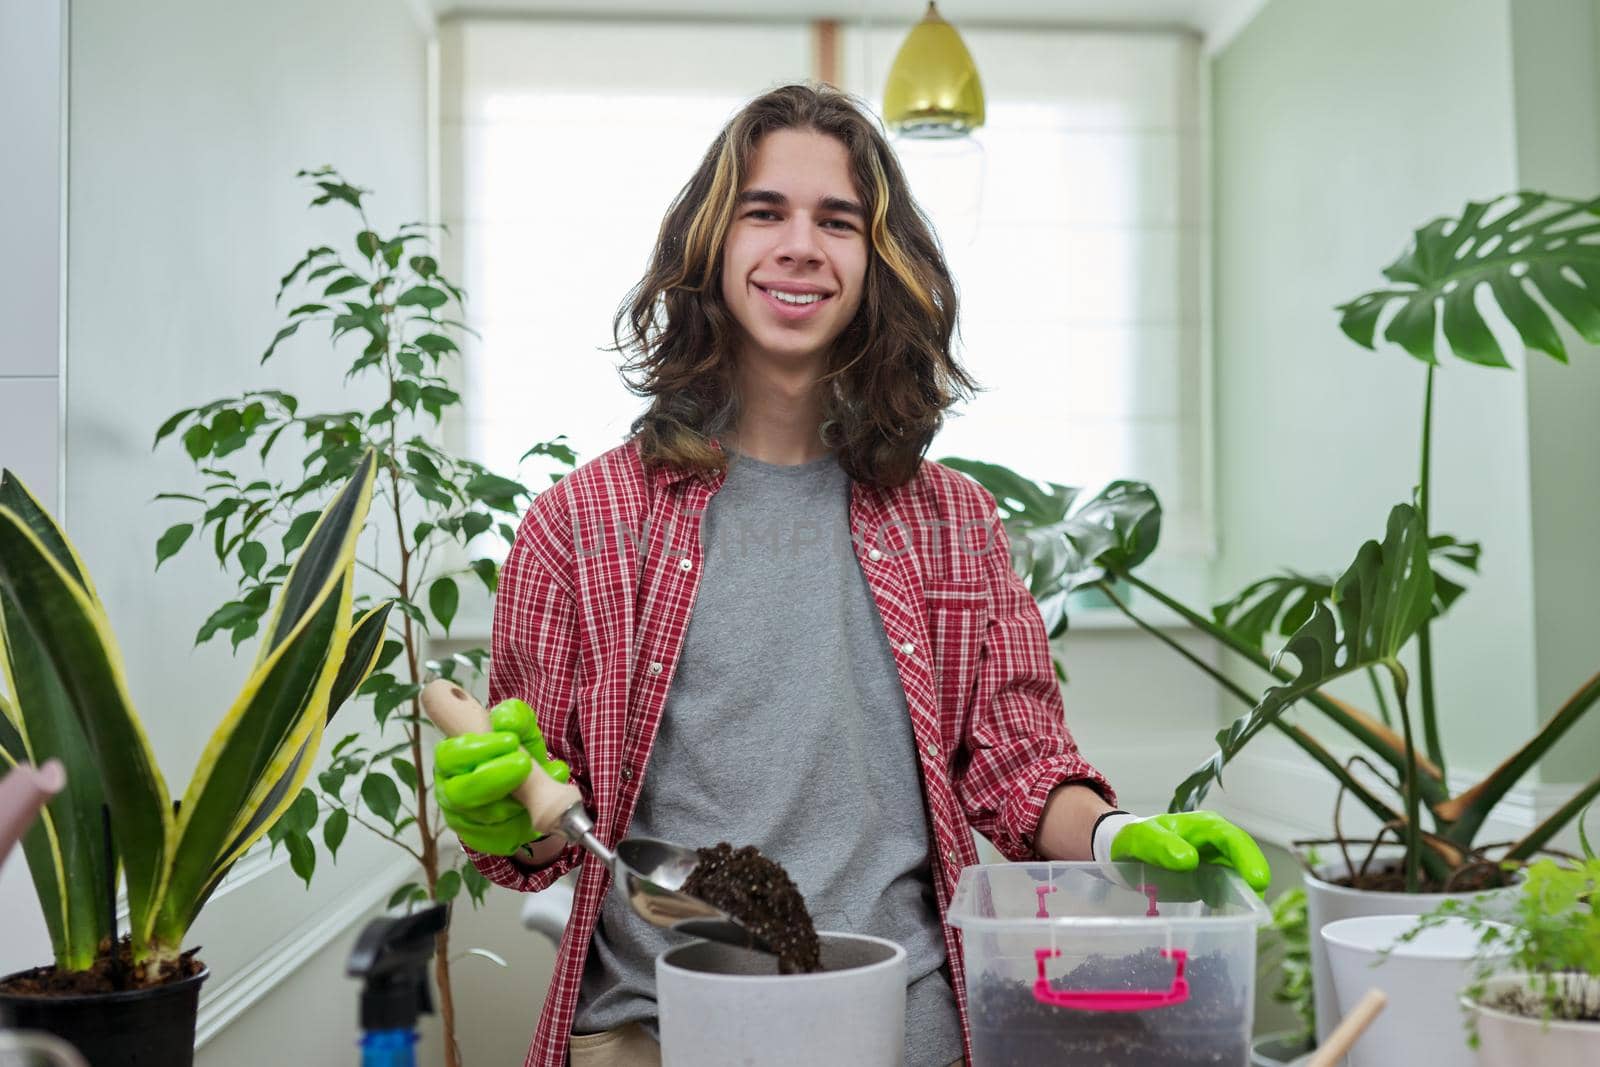 Guy teenager caring replanting indoor plants in pots by VH-studio